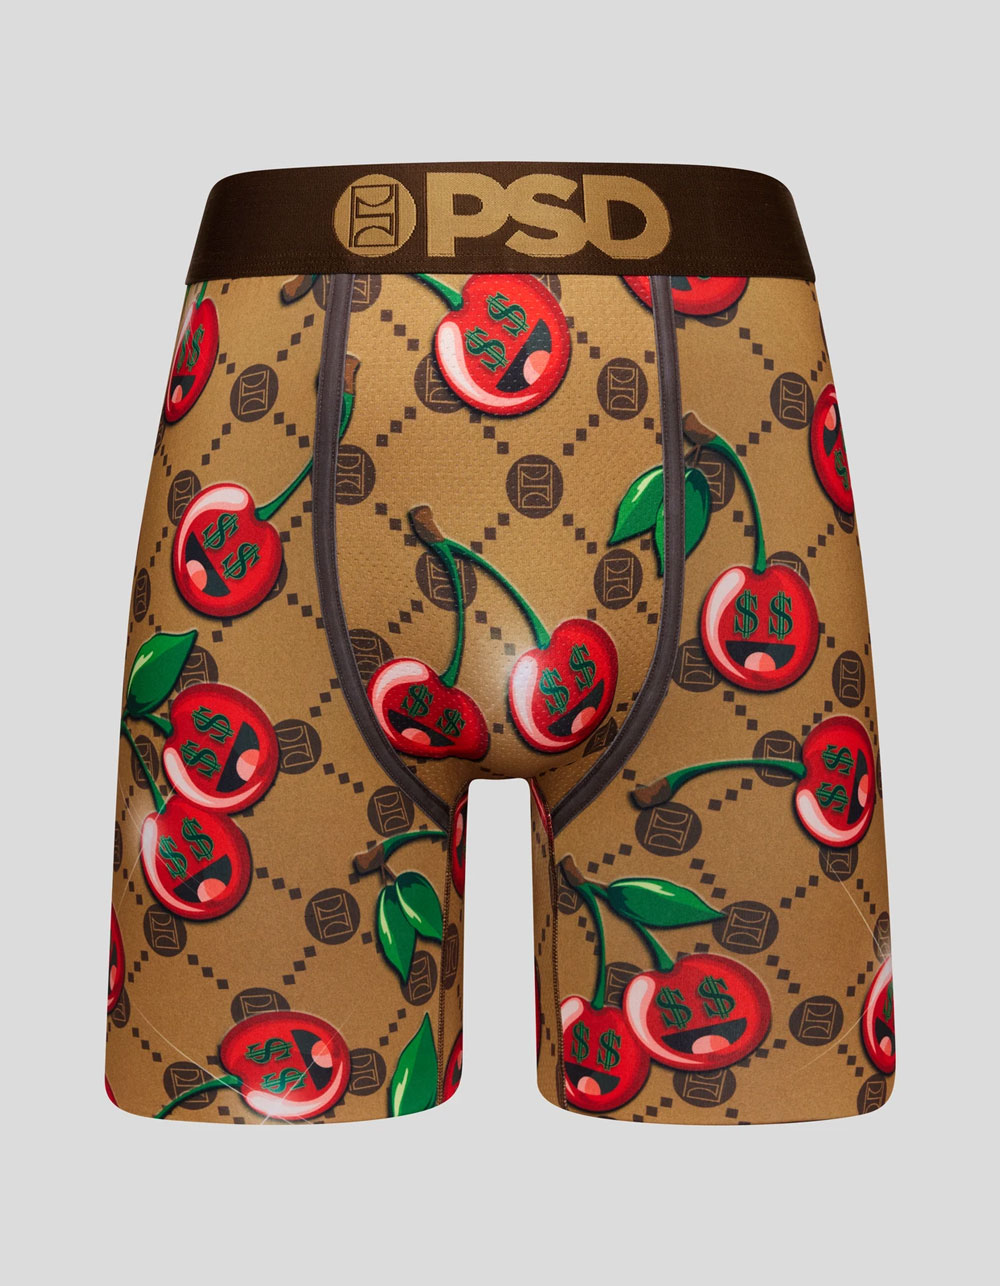 PSD Underwear Women's Underwear Hooters Boy Short, Wide Elastic Band,  Stretch Fabric, Athletic Fit